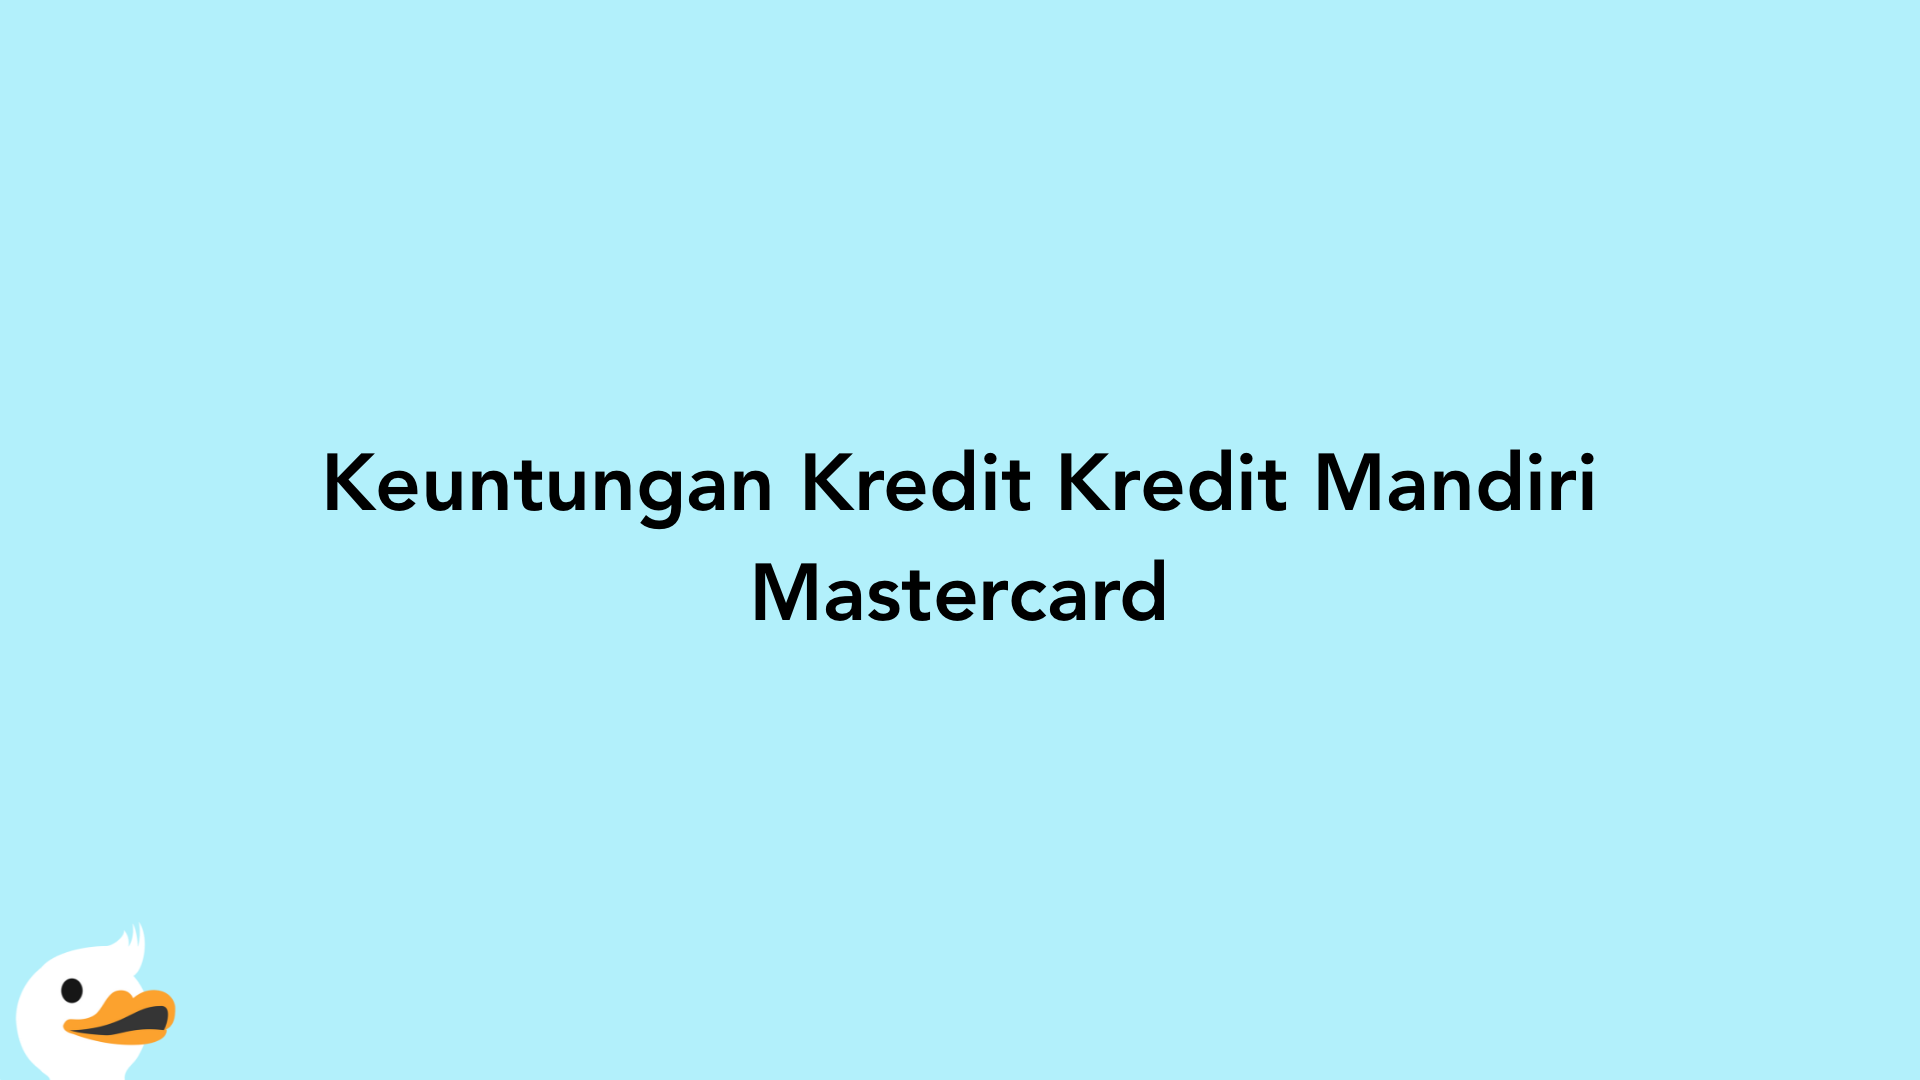 Keuntungan Kredit Kredit Mandiri Mastercard